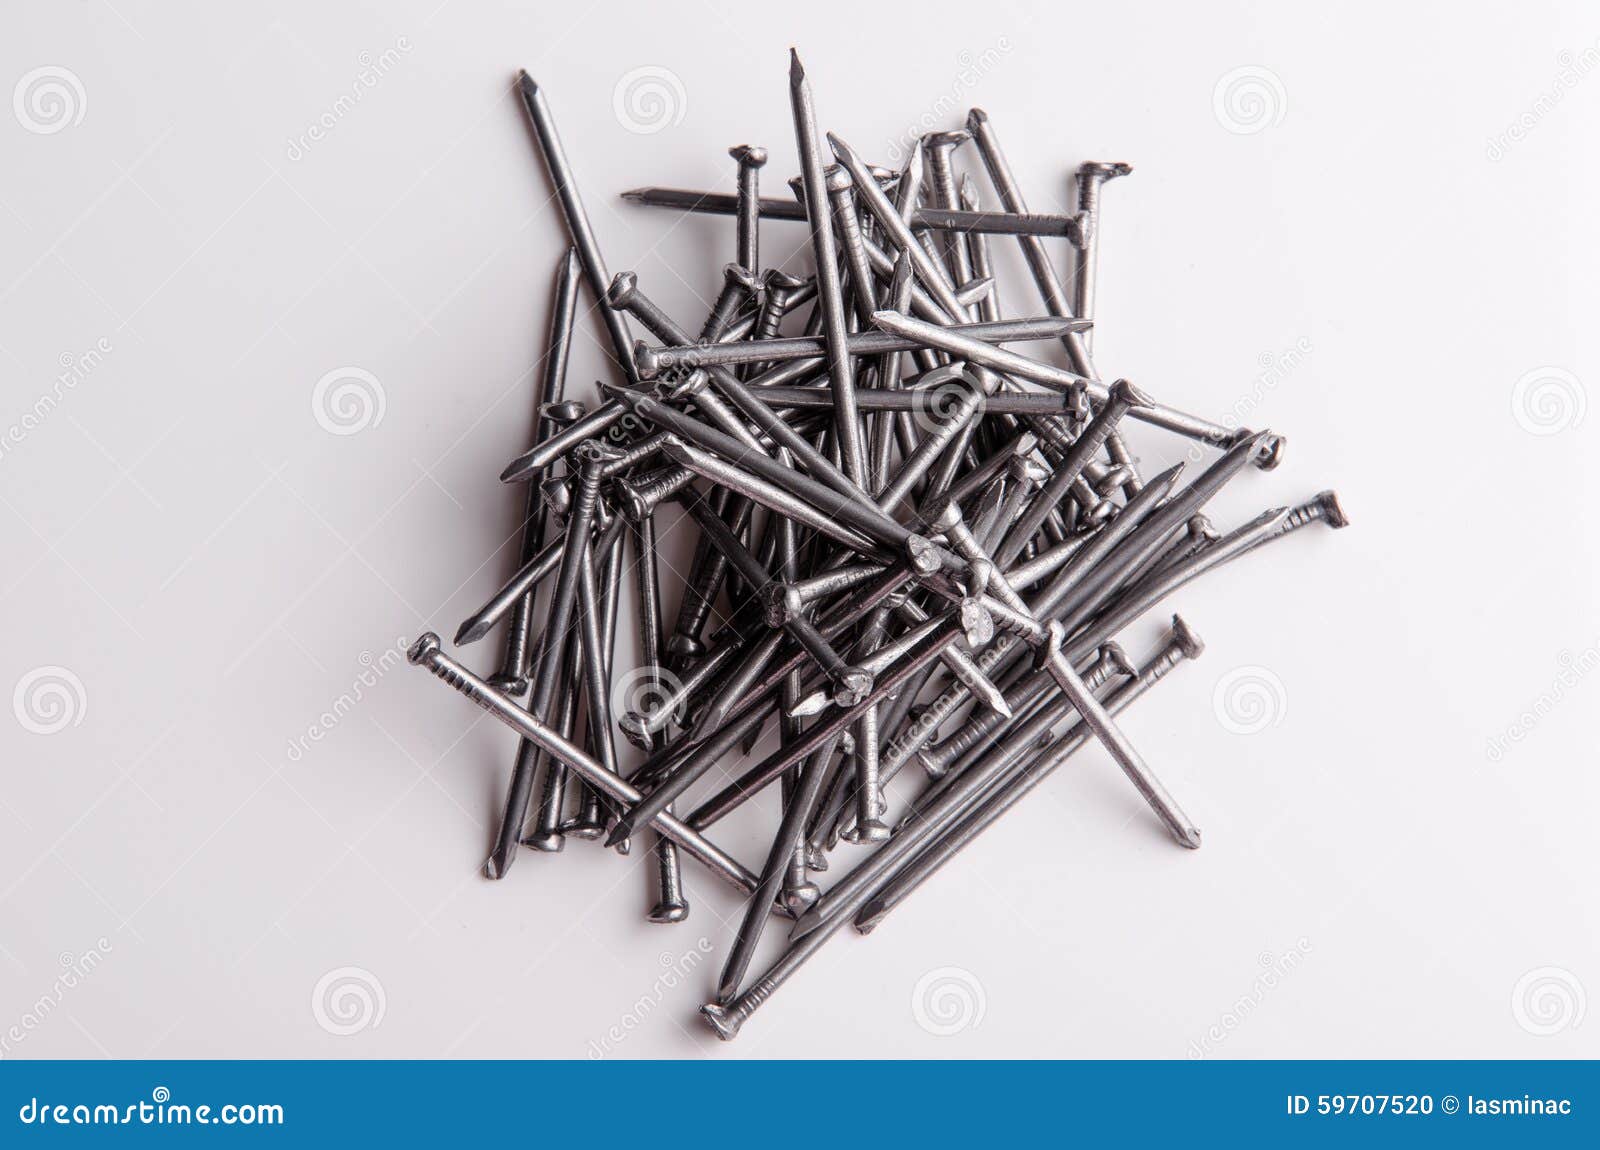 Metal nails stock photo. Image of hammer, nail, connect - 59707520